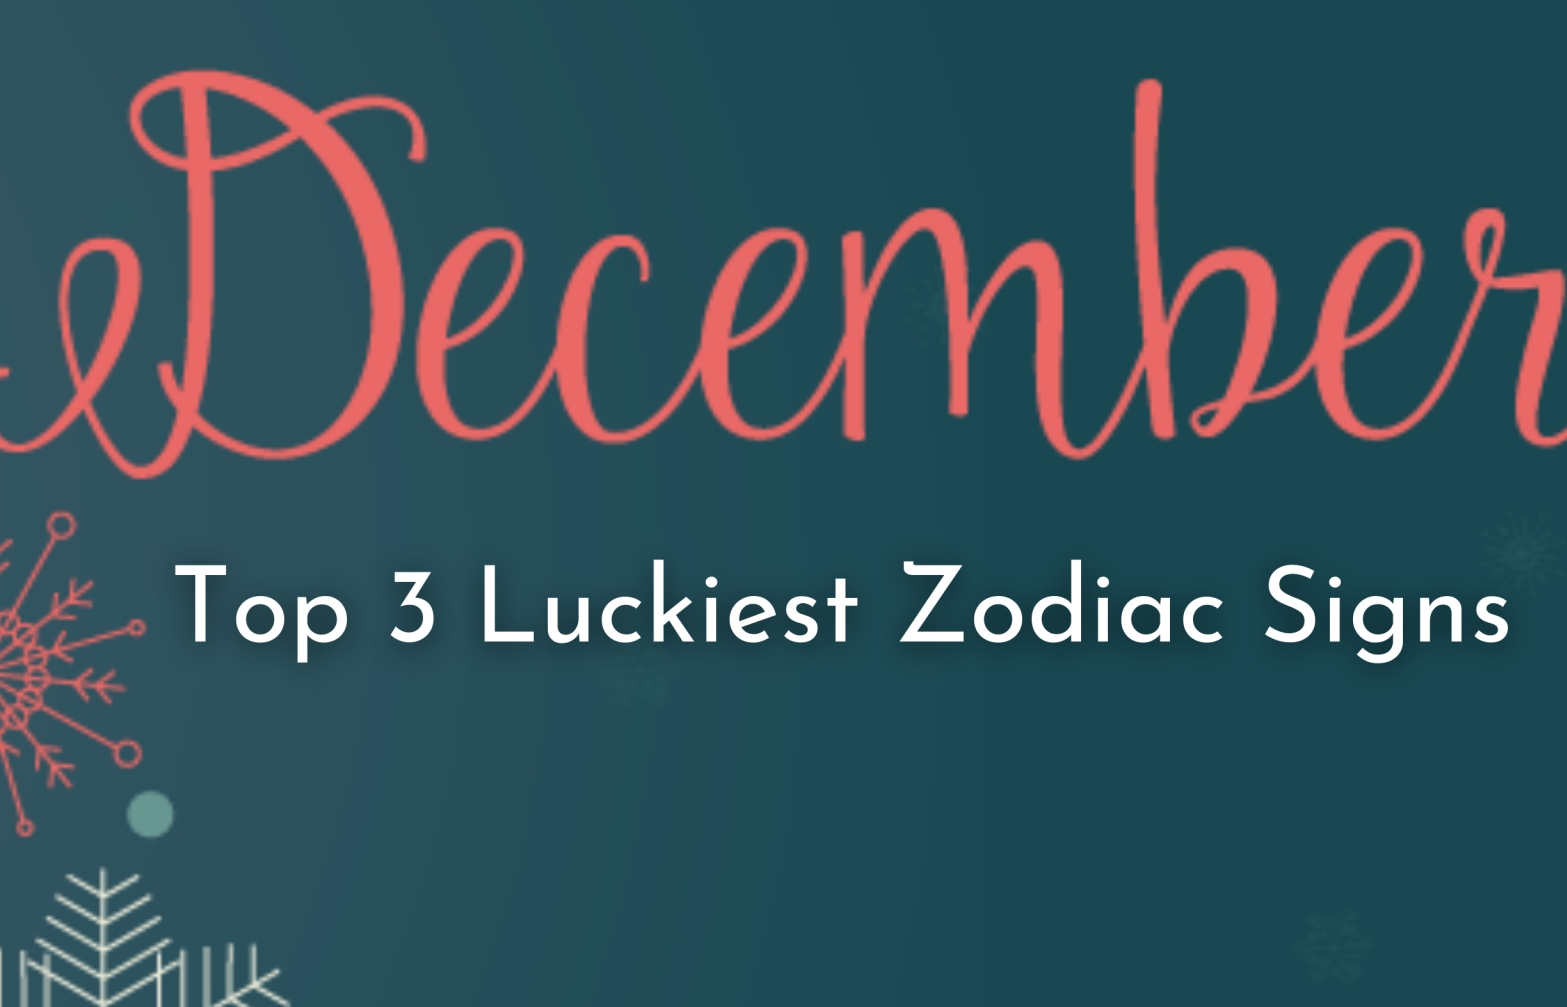 Top 3 Luckiest Zodiac Signs in December